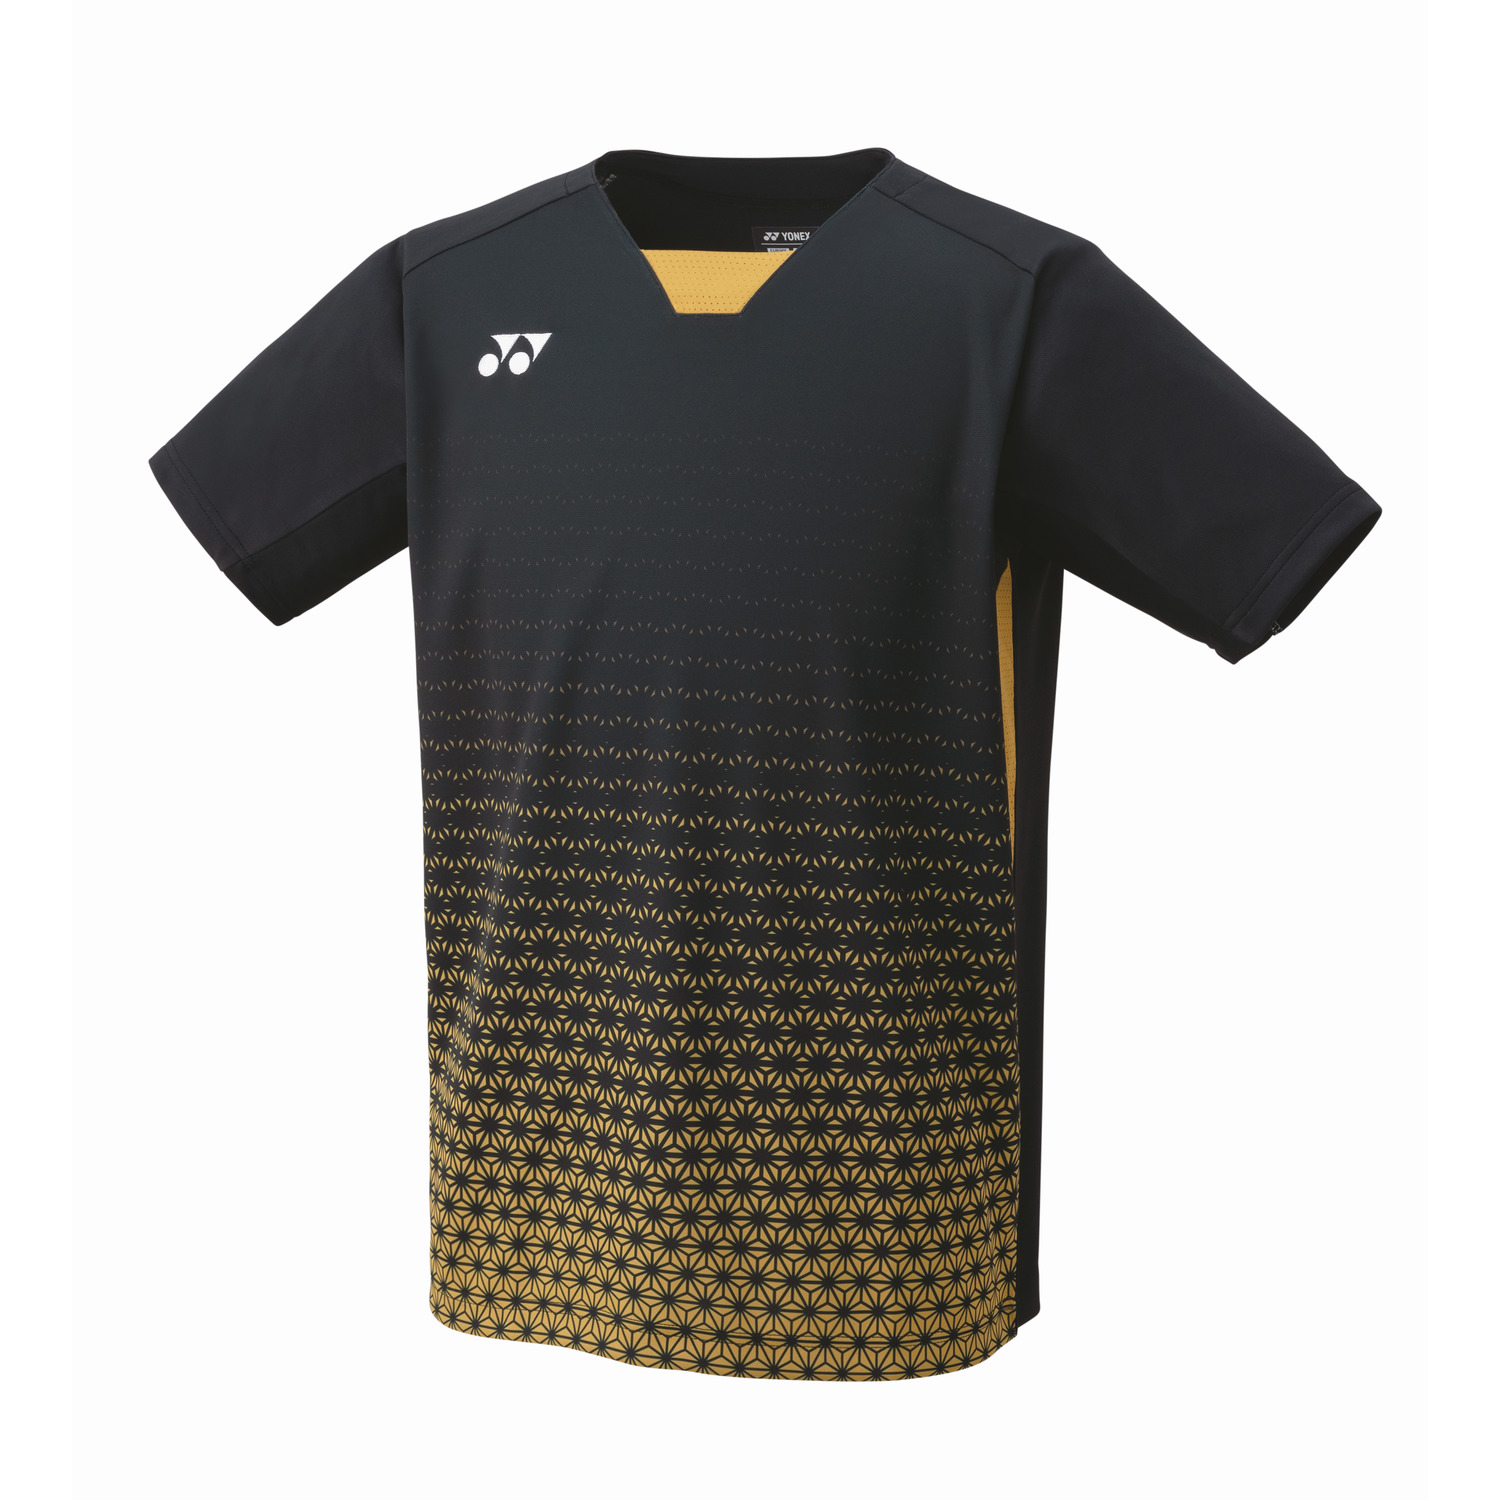 Yonex Japan National Badminton/ Sports Shirt 10615YX Black/ Gold MEN'S